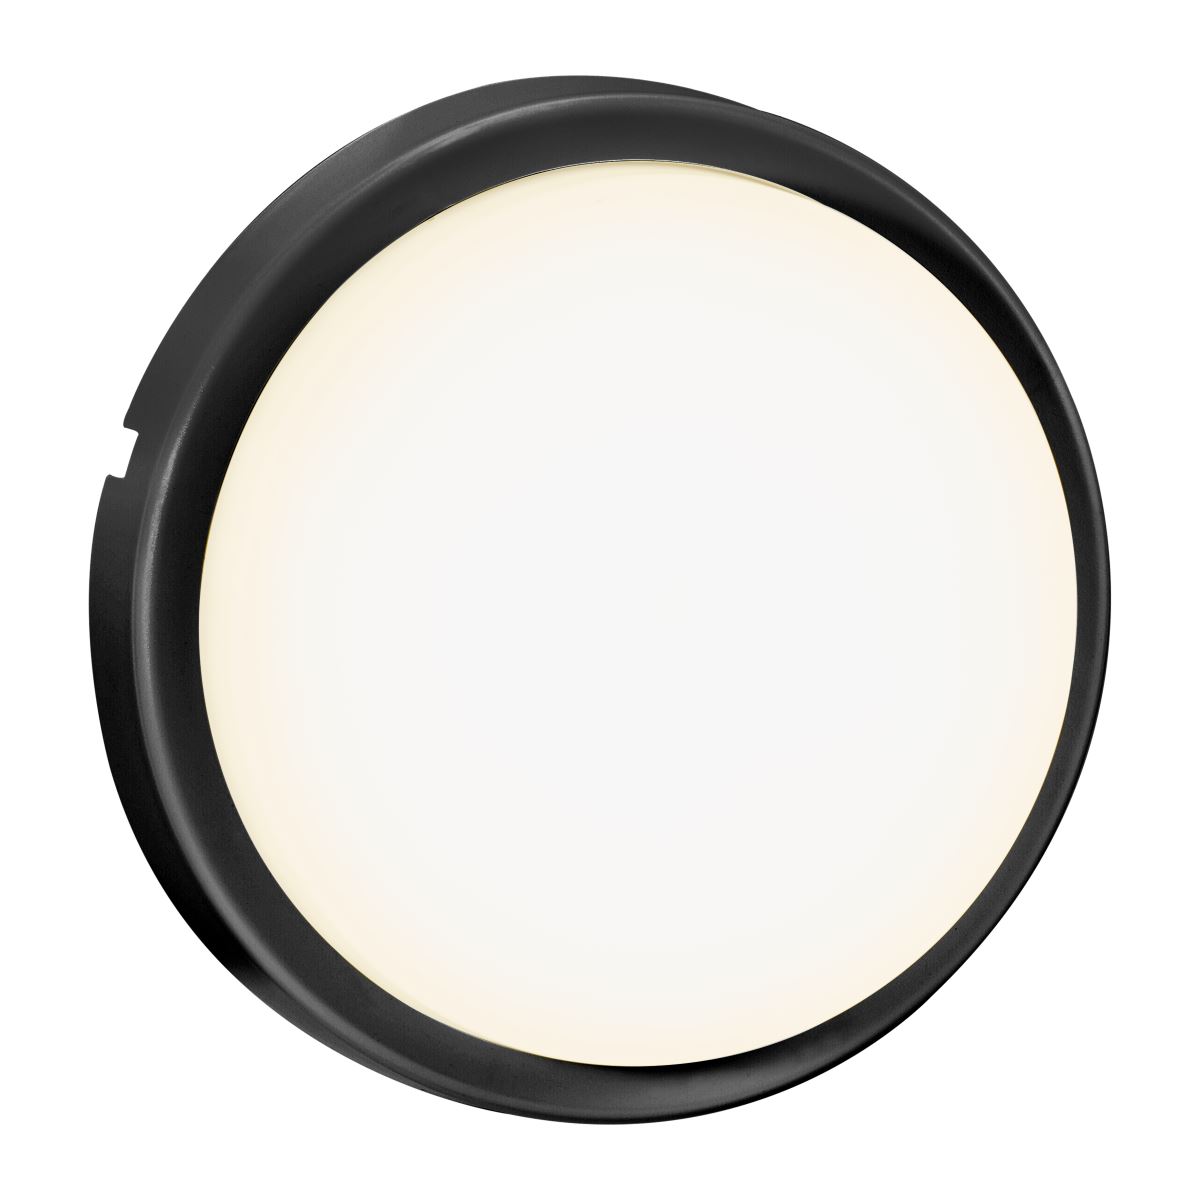 Nordlux CUBA OUT LED Außenwandleuchte schwarz, opal weiß 700lm IP54 17,5x17,5x17,5cm von Nordlux